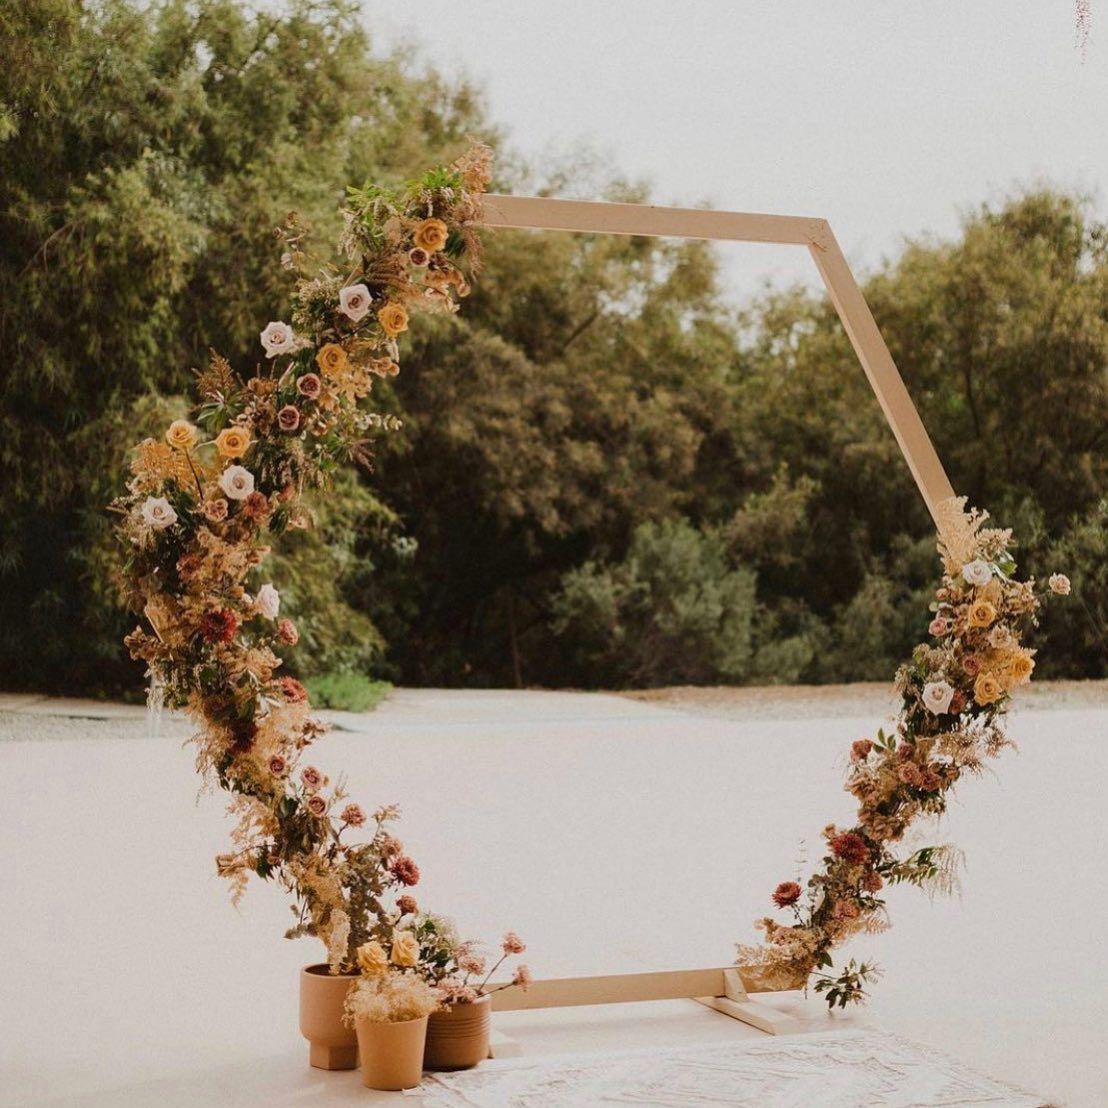 Wedding Altar Ideas For Your Rustic Ceremony | LaptrinhX / News